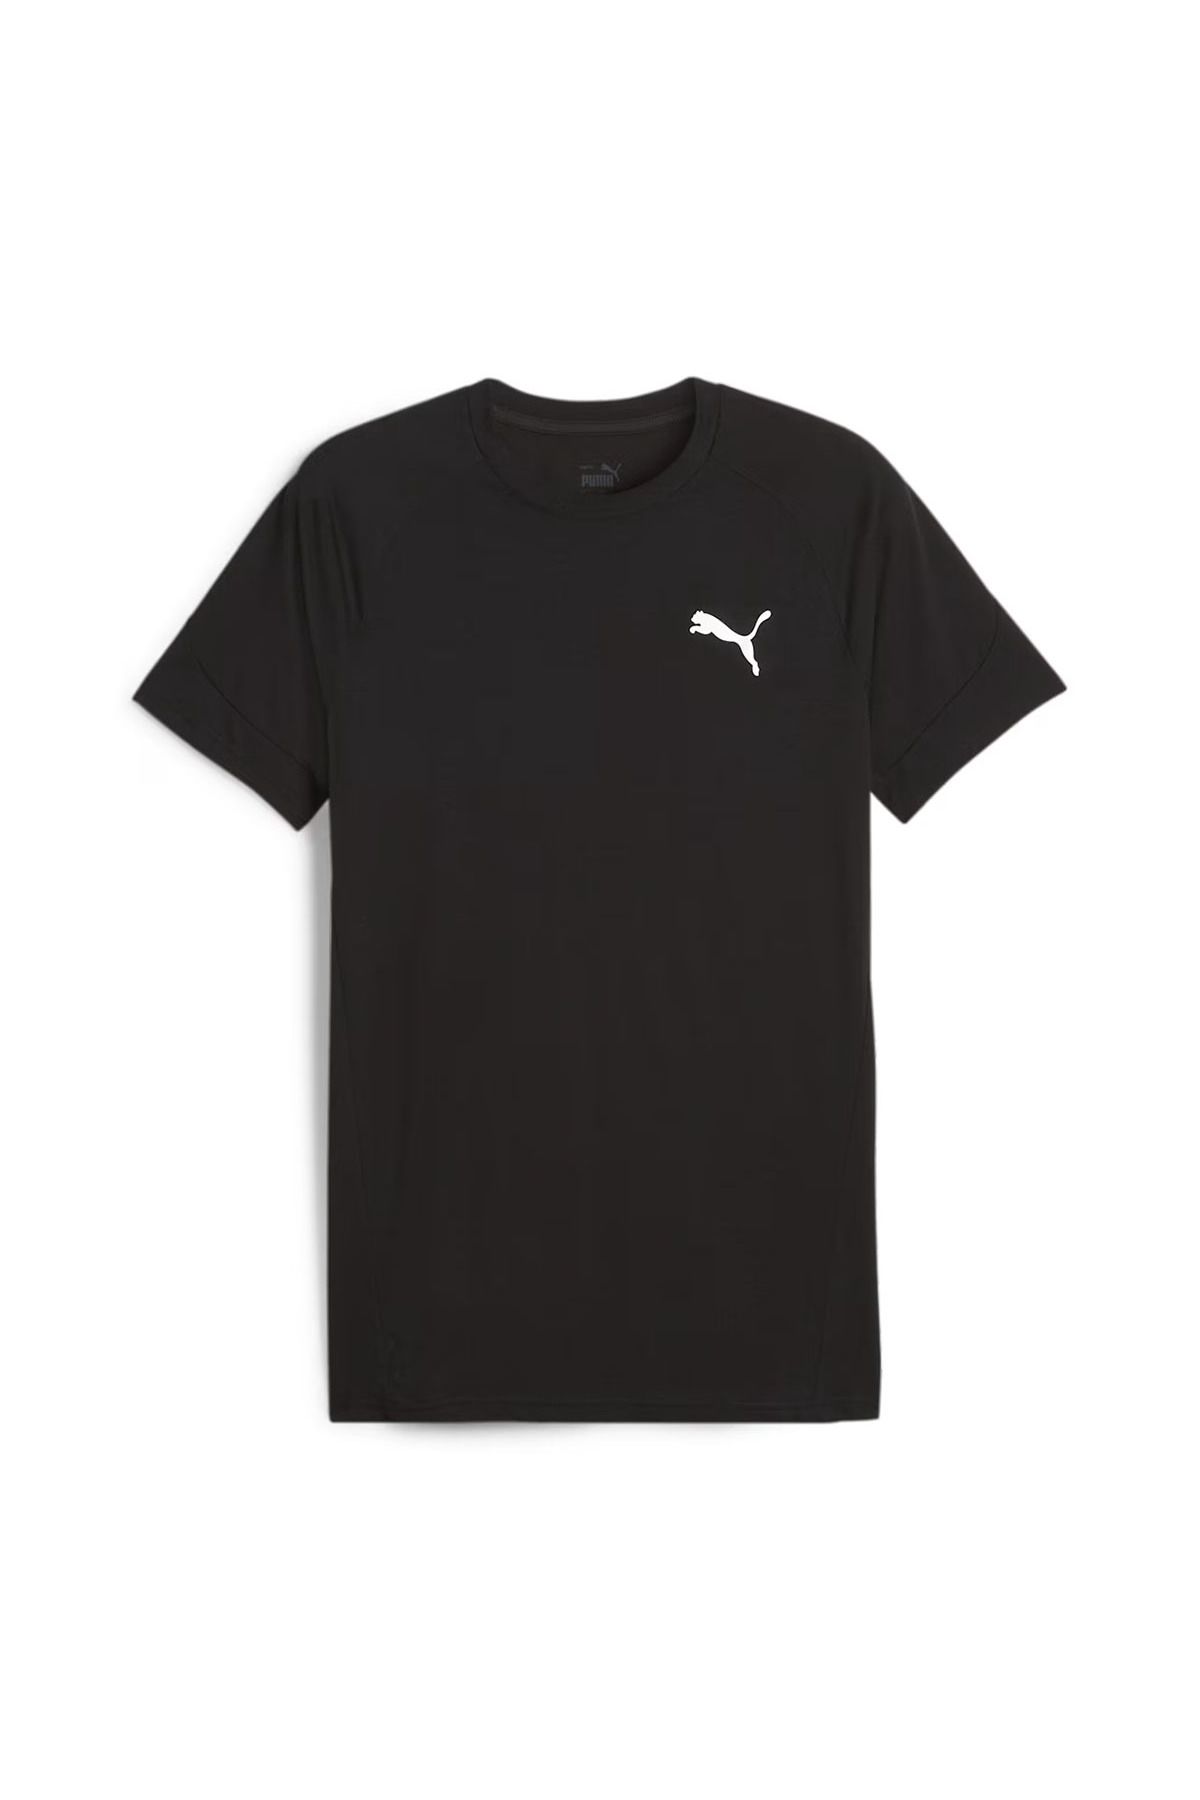 Puma Evostripe Erkek Siyah Günlük Stil T-Shirt 67899201